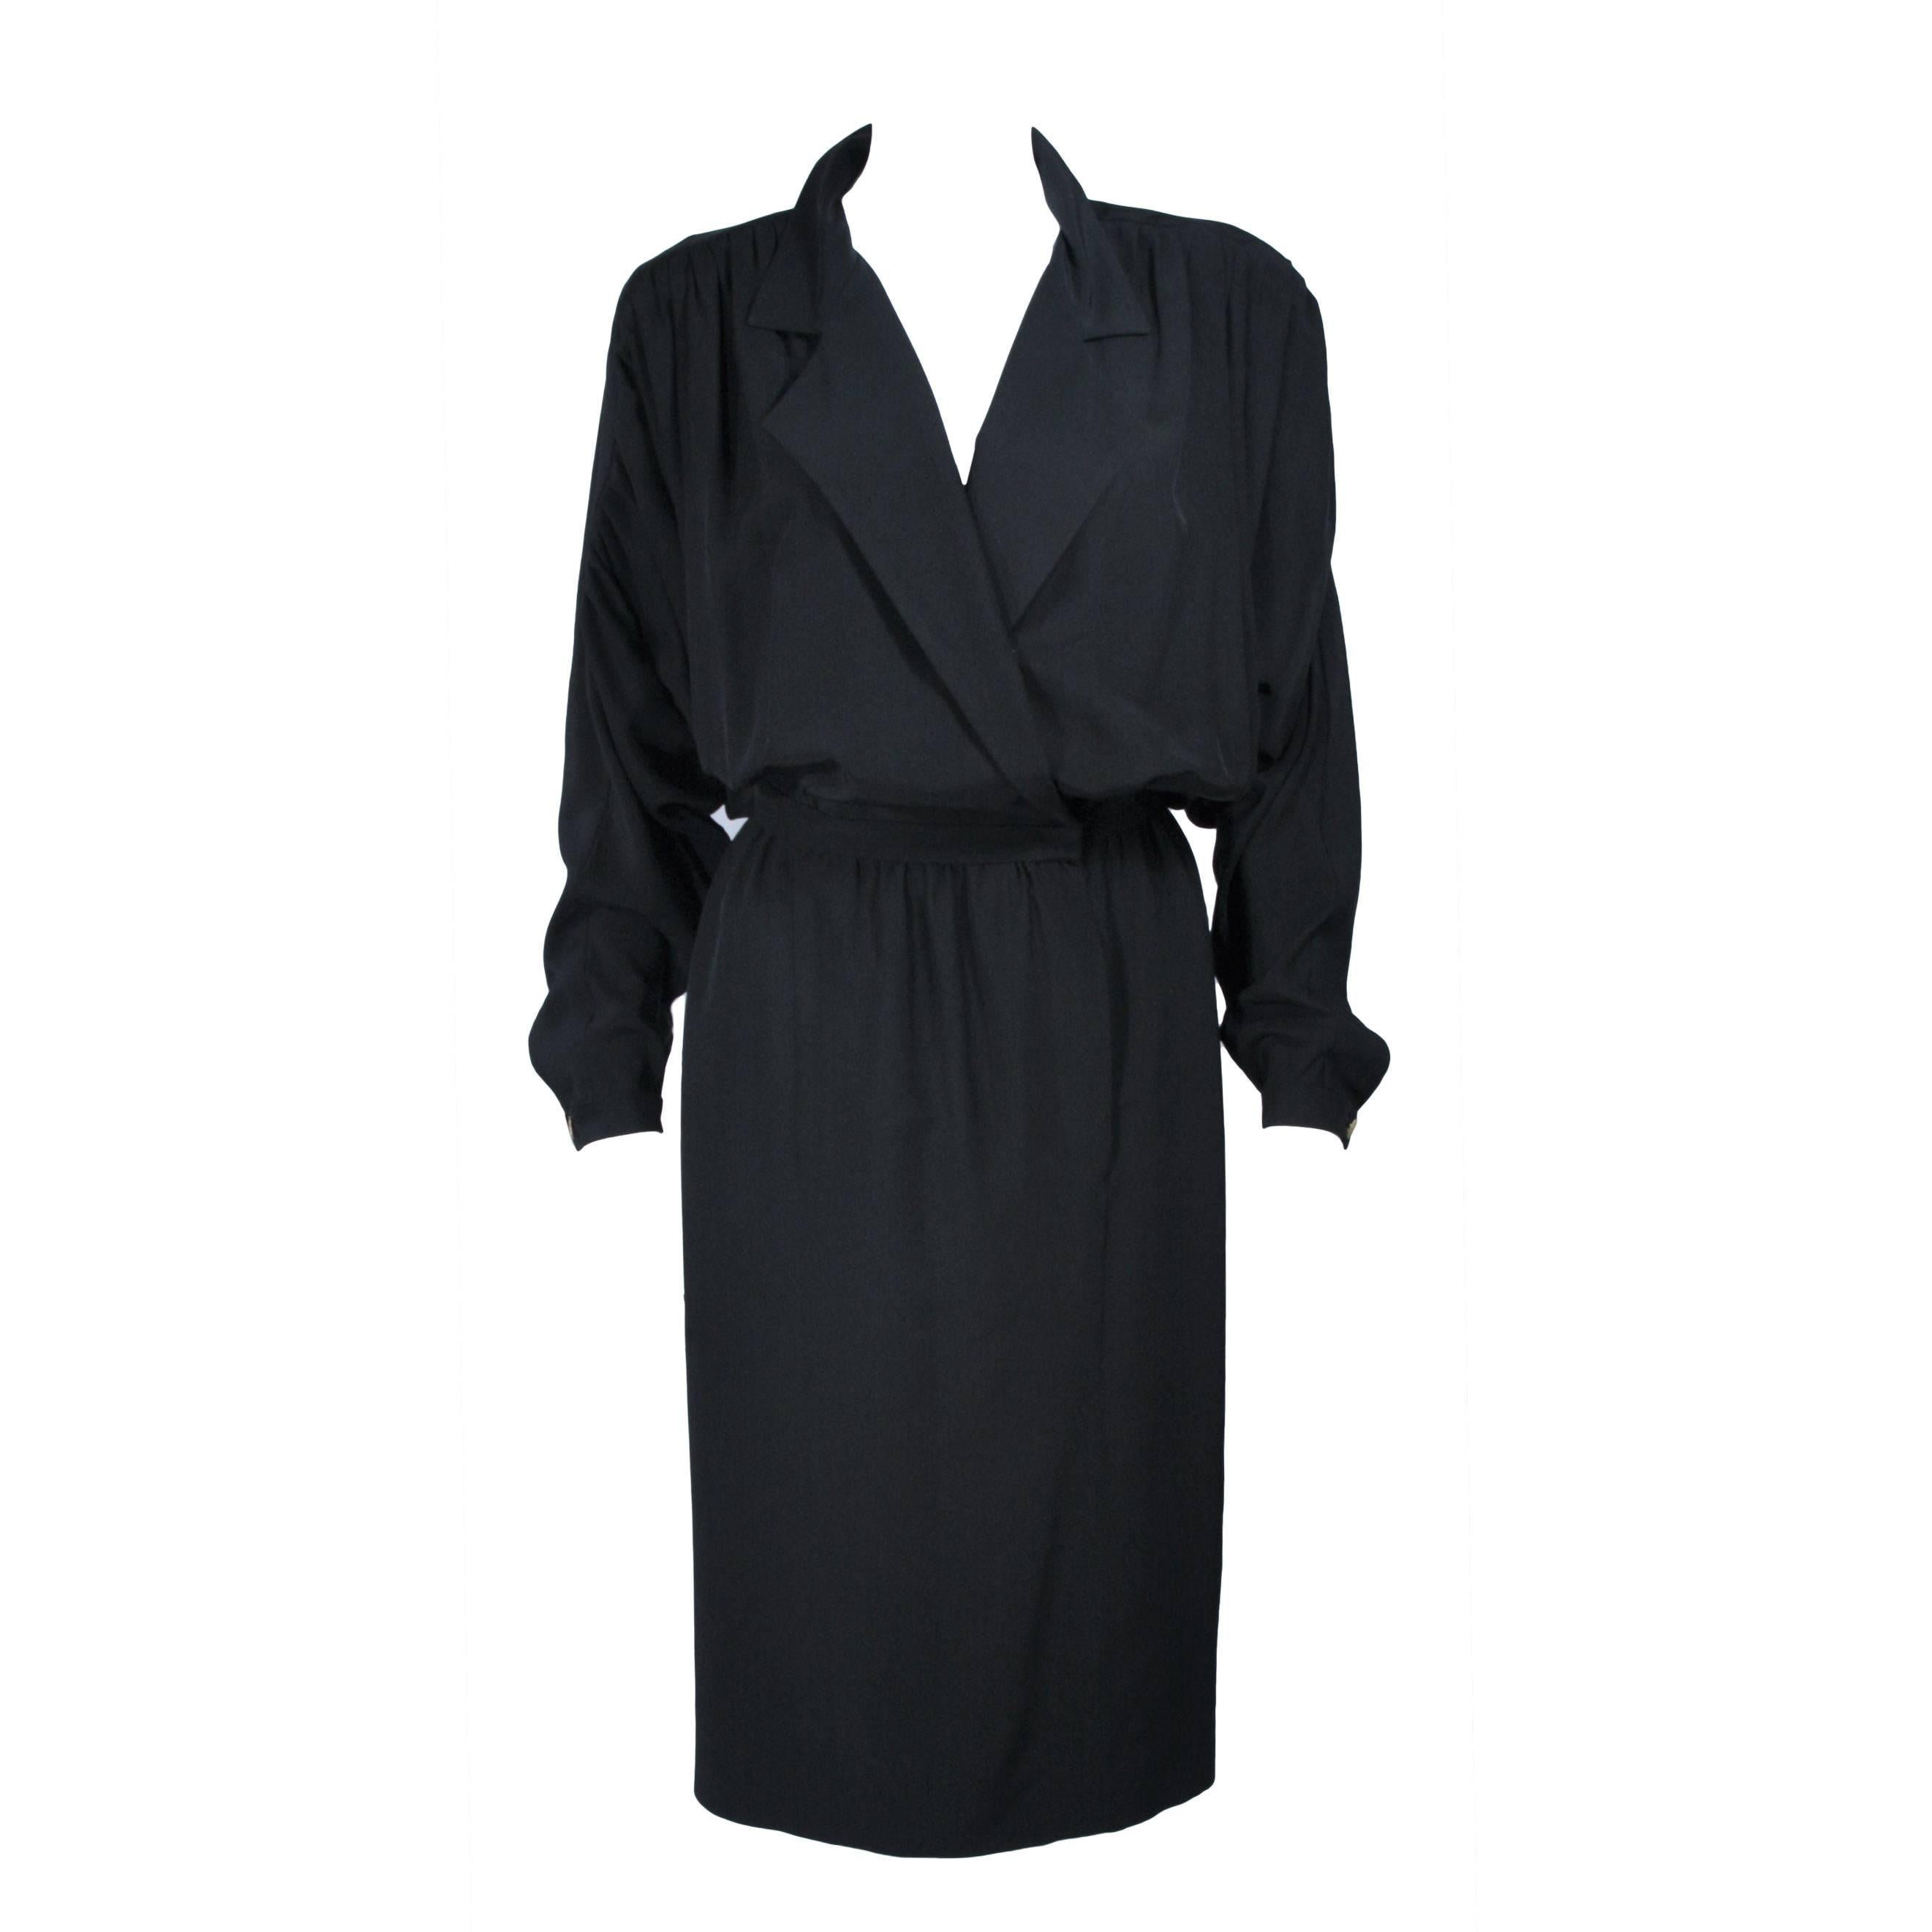 CHANEL Black Silk Draped Secretary Style Dress Size 2 